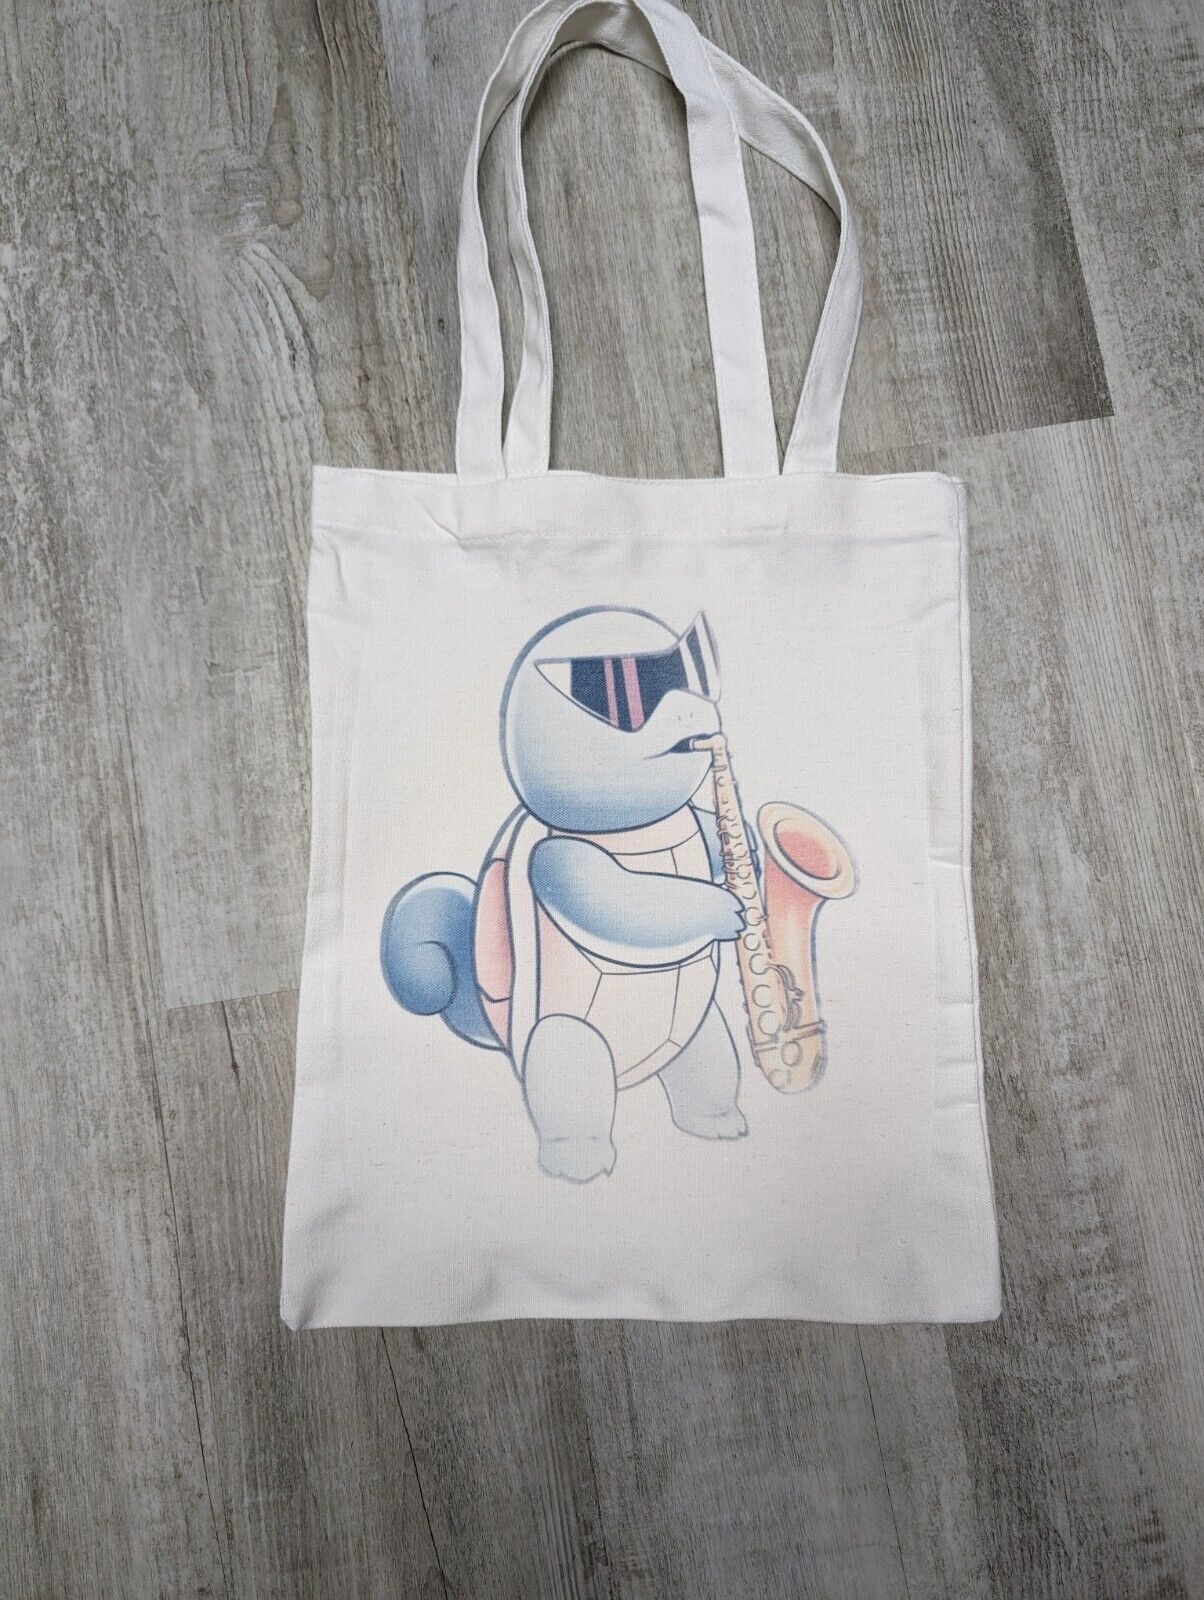 Saxophone Squirtle Tote Bag - Cust Made Pokemon Tote Bag - Pokemon Bag 